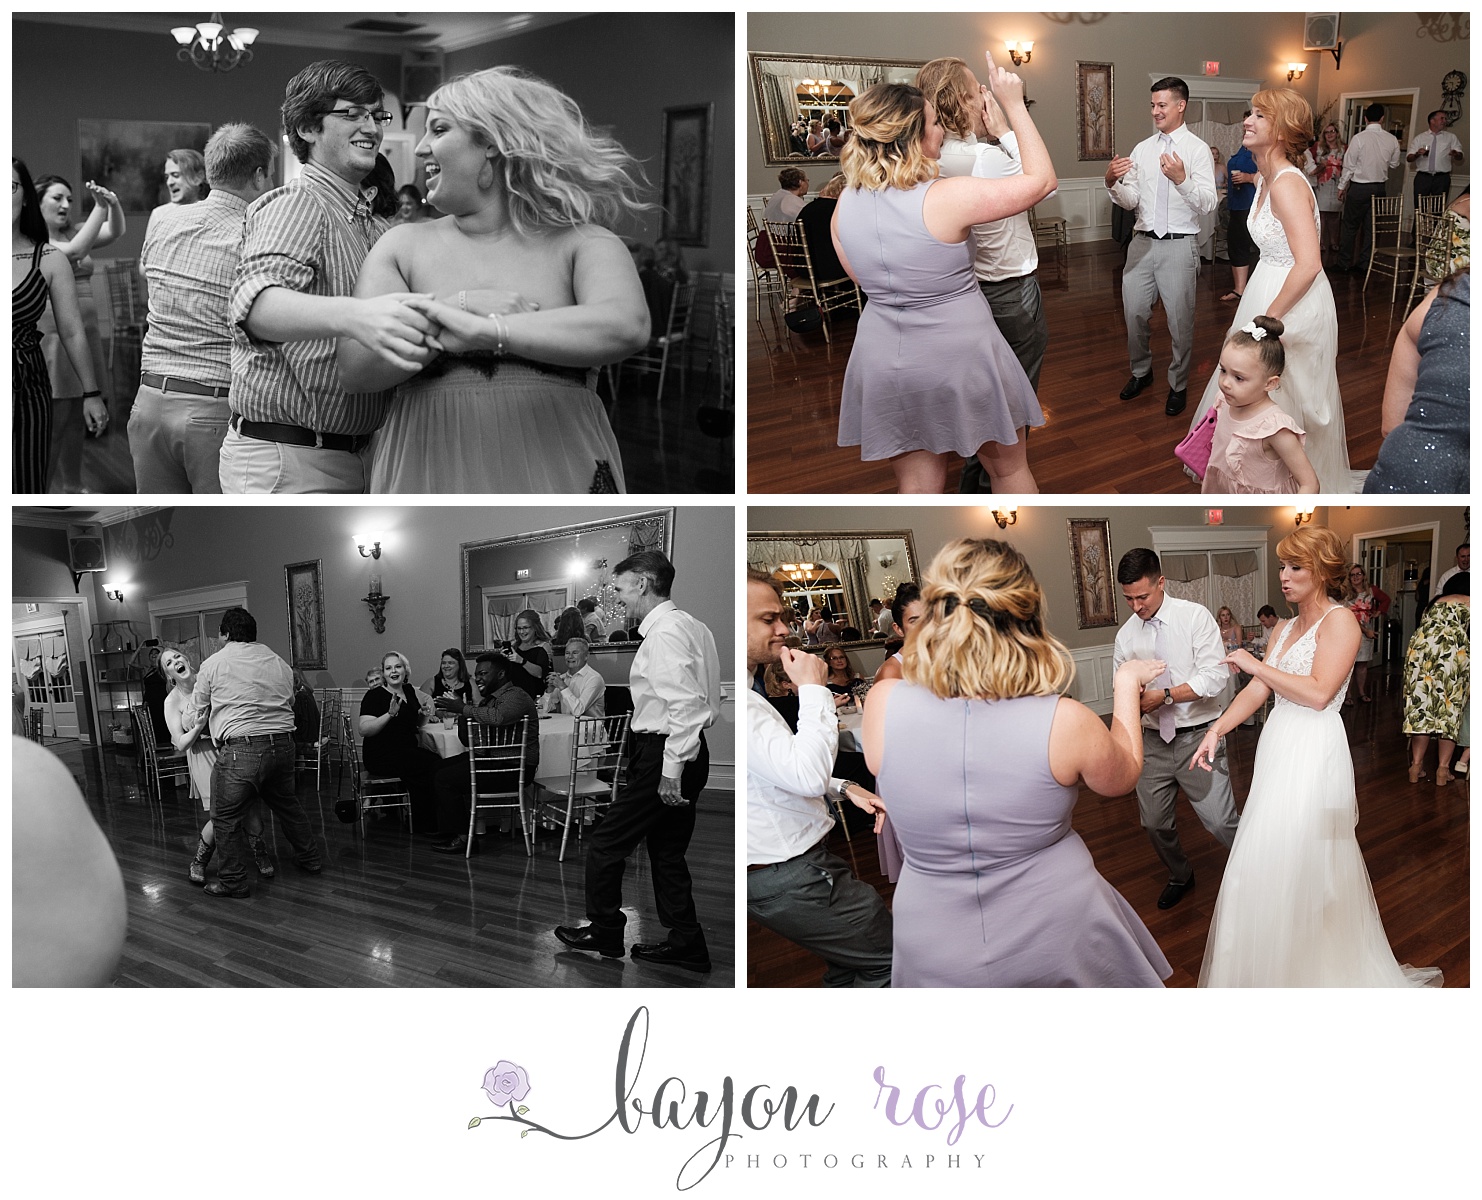 Social distance dancing during wedding reception